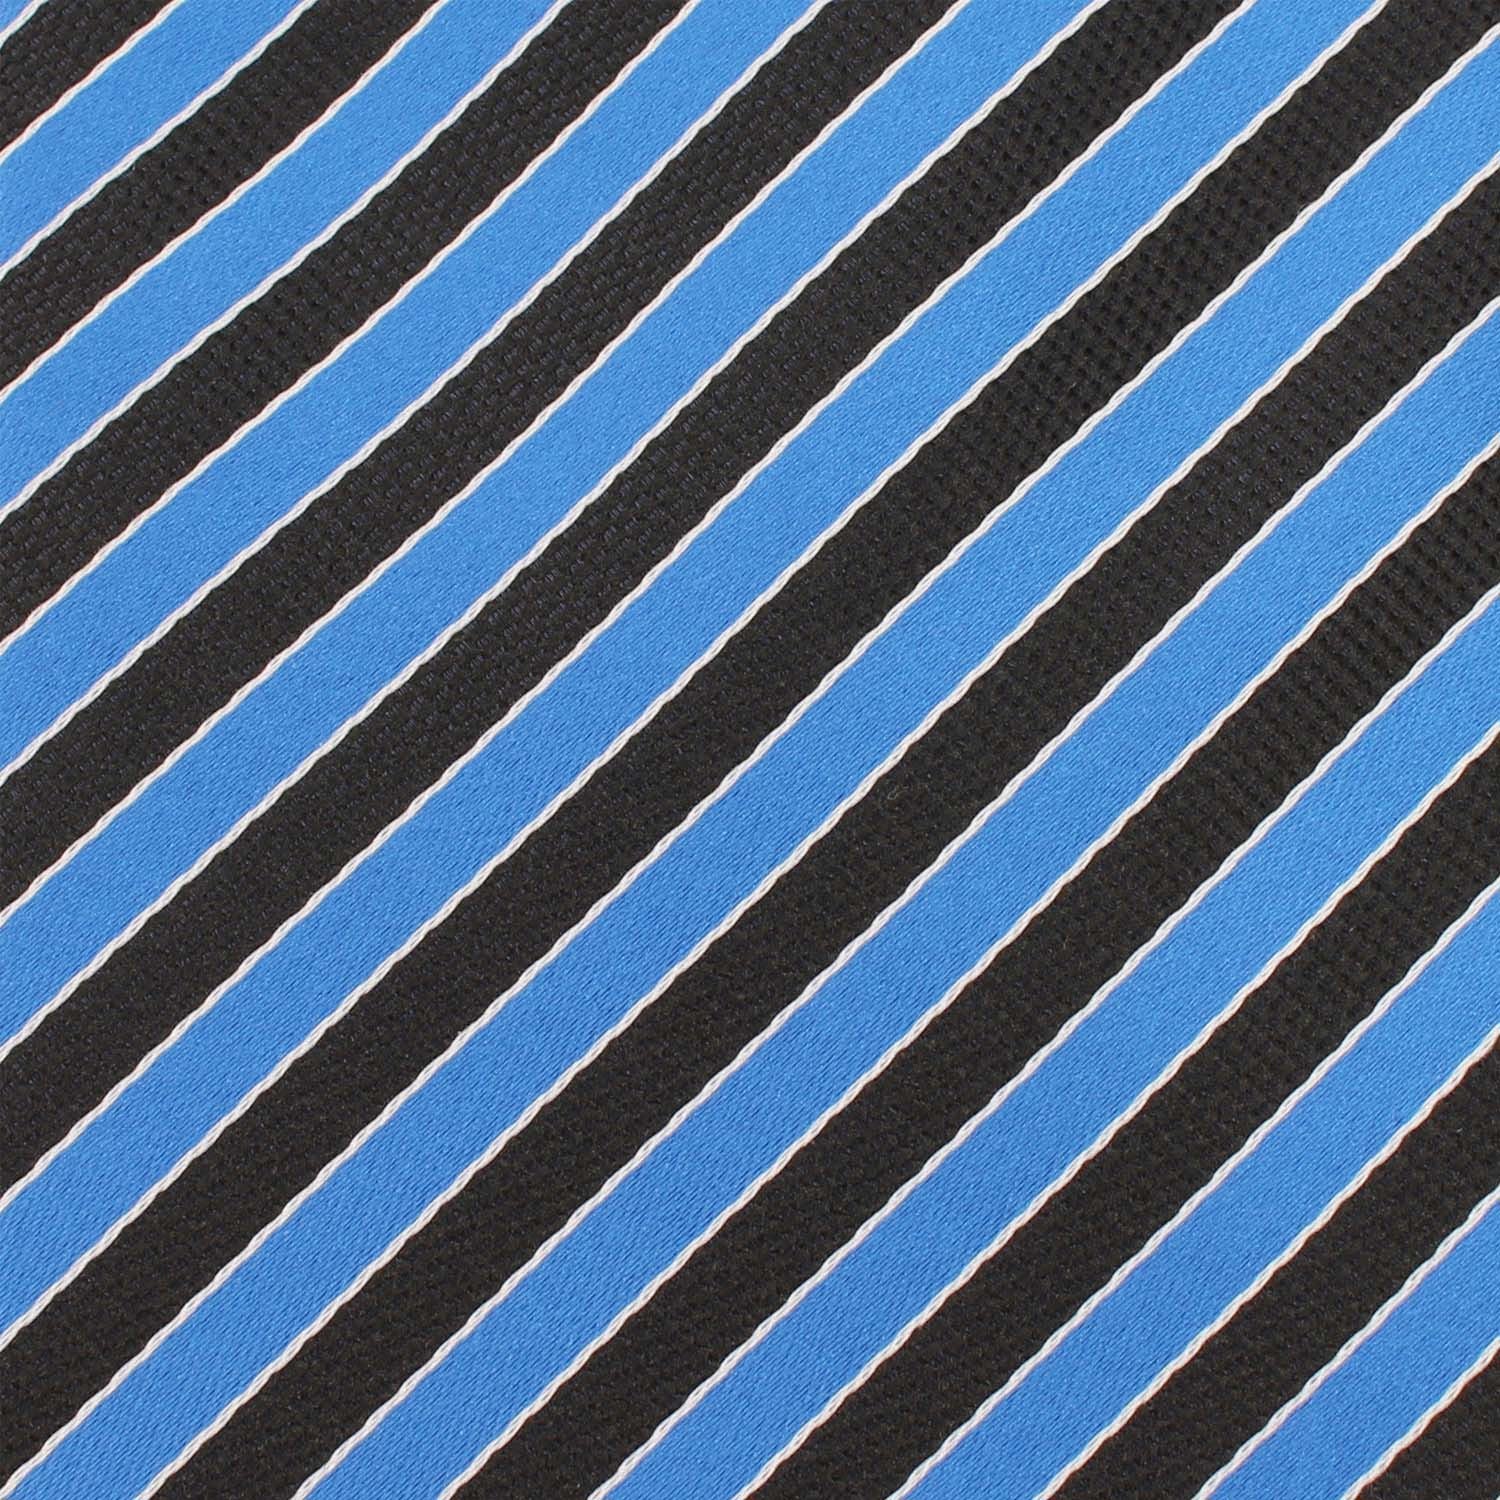 Striped Blue Black Fabric Skinny Tie X149